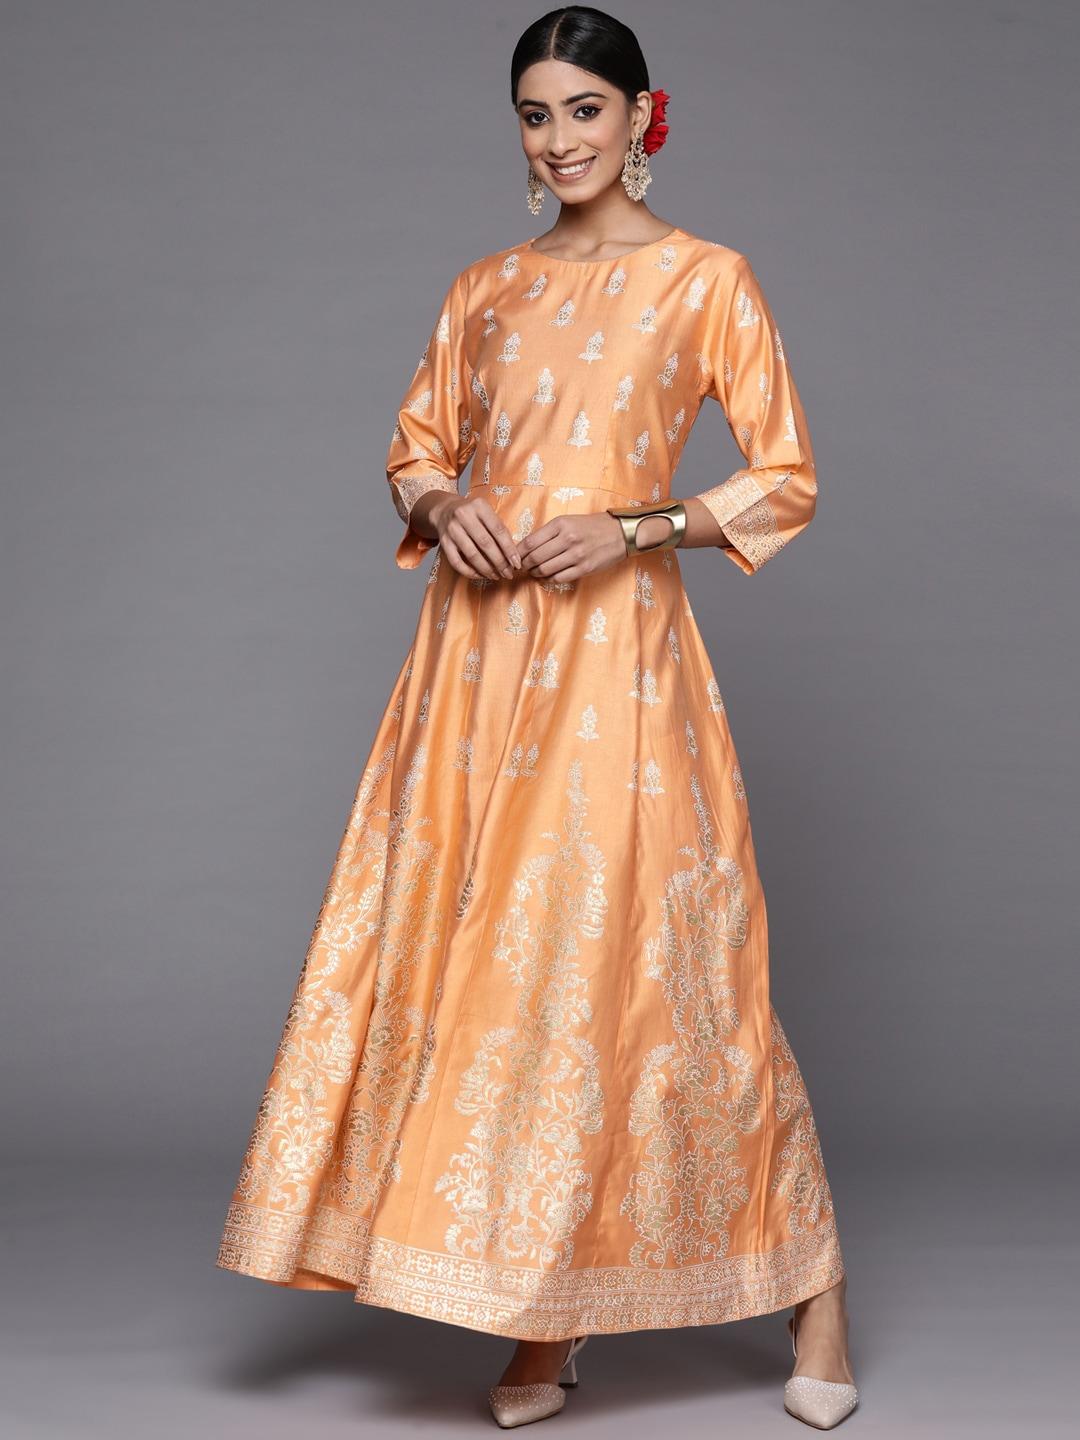 Indo Era Peach-Coloured & White Floral Printed Liva Ethnic Maxi Dress